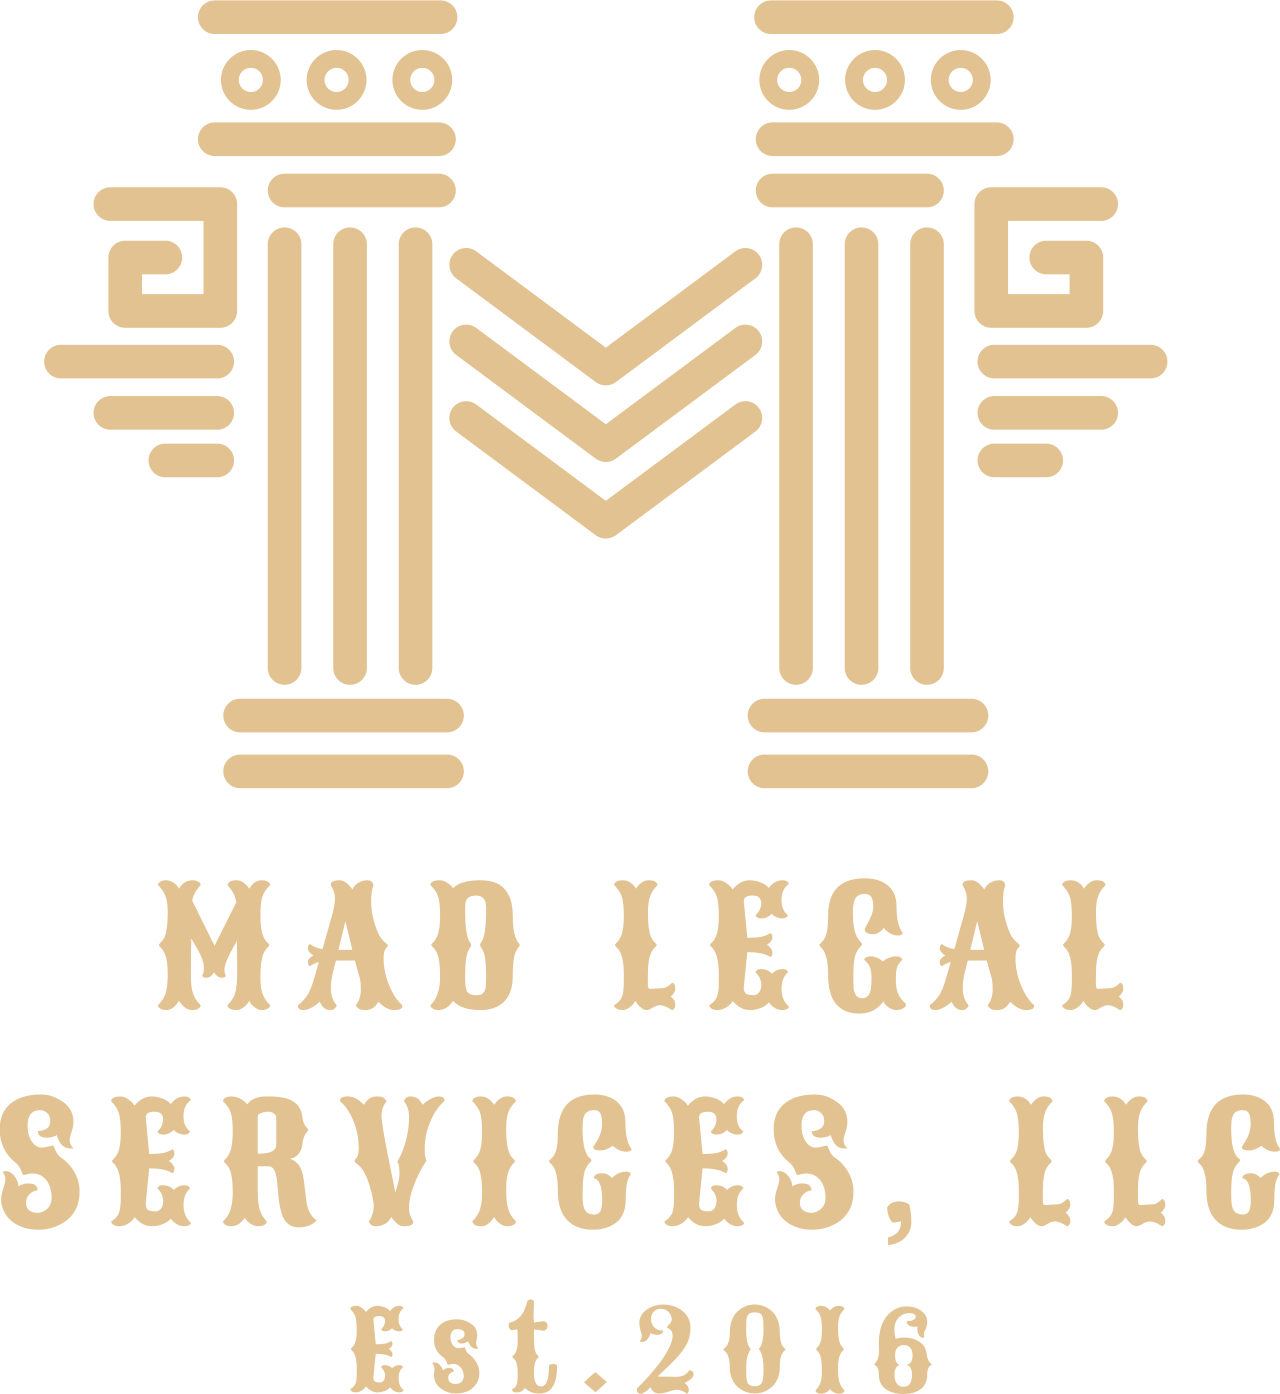  MAD LEGAL 
SERVICES, LLC's logo